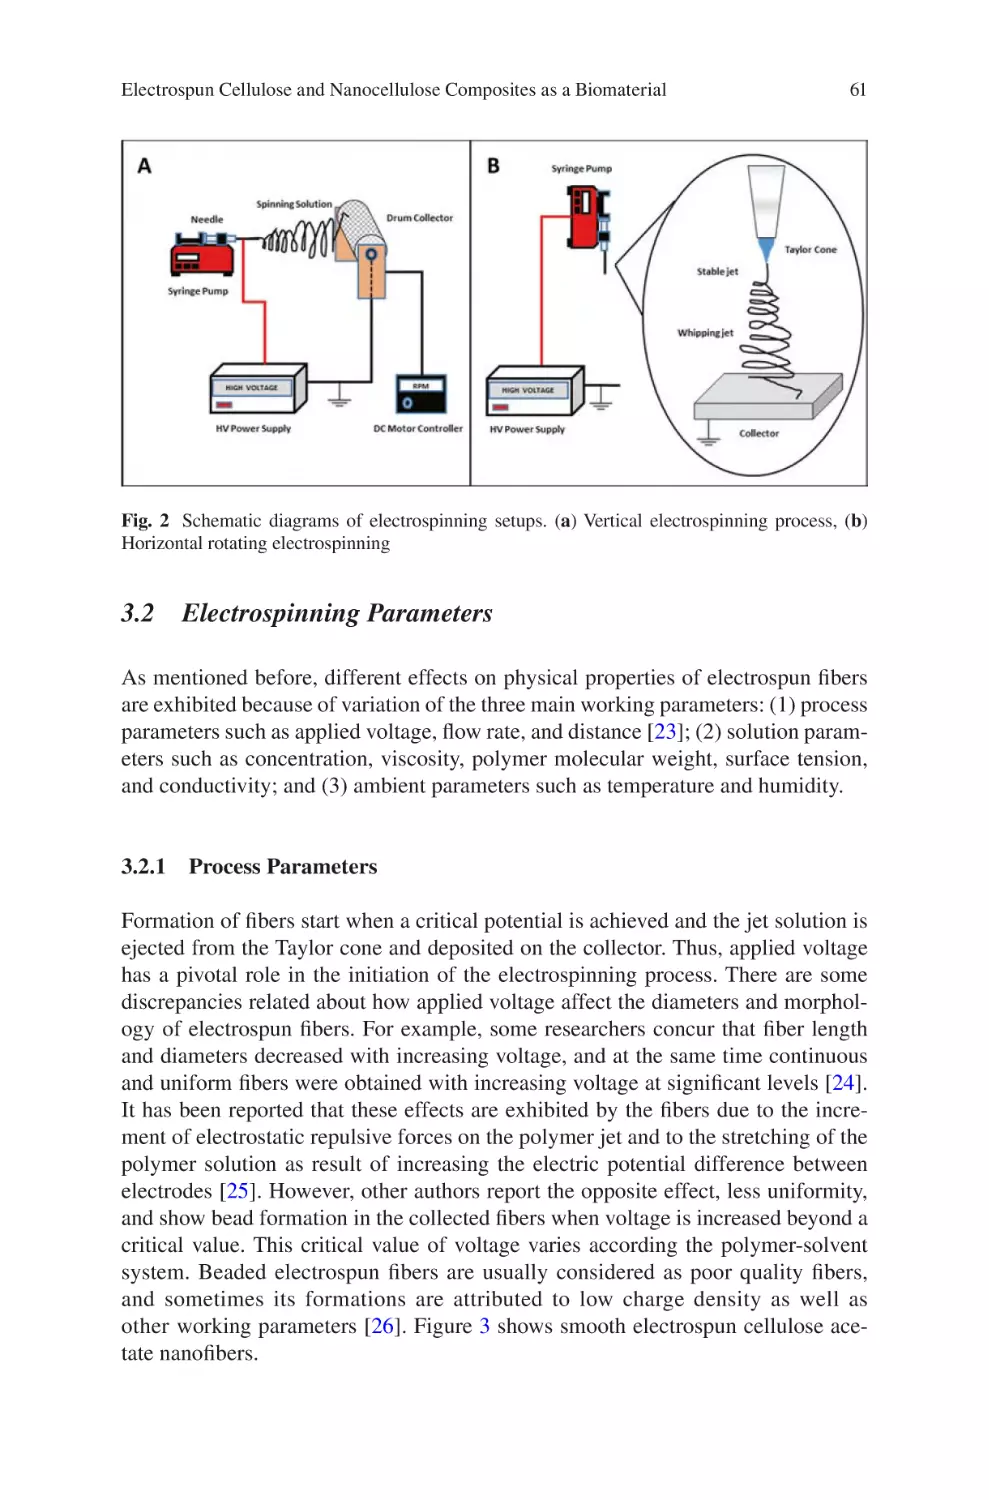 3.2 Electrospinning Parameters
3.2.1 Process Parameters